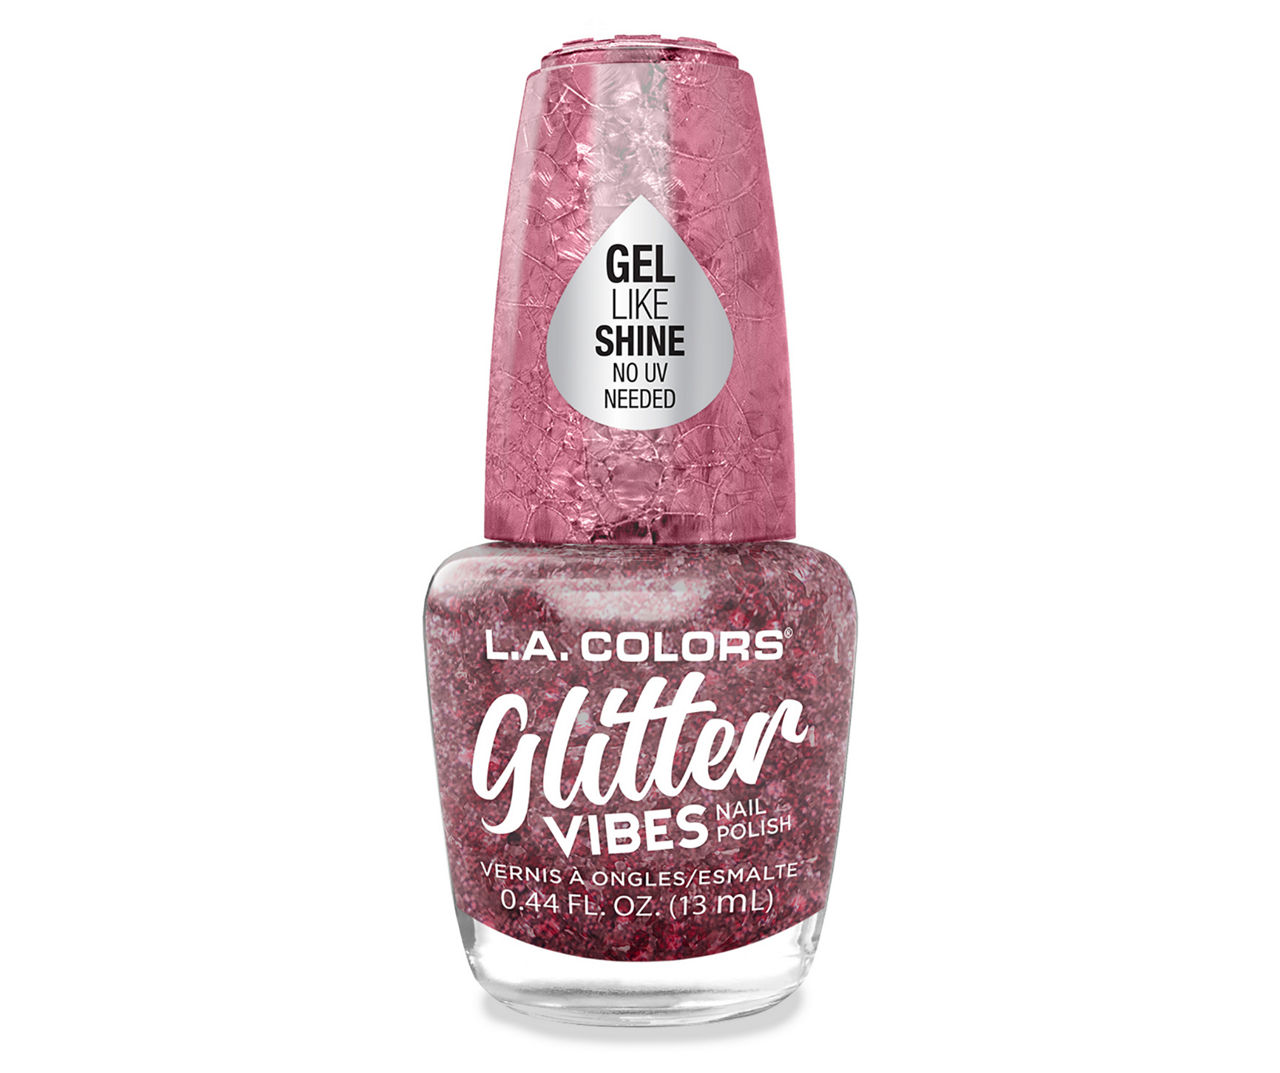 Glitter Vibes Nail Polish in Pink Bling, 0.44 Oz.